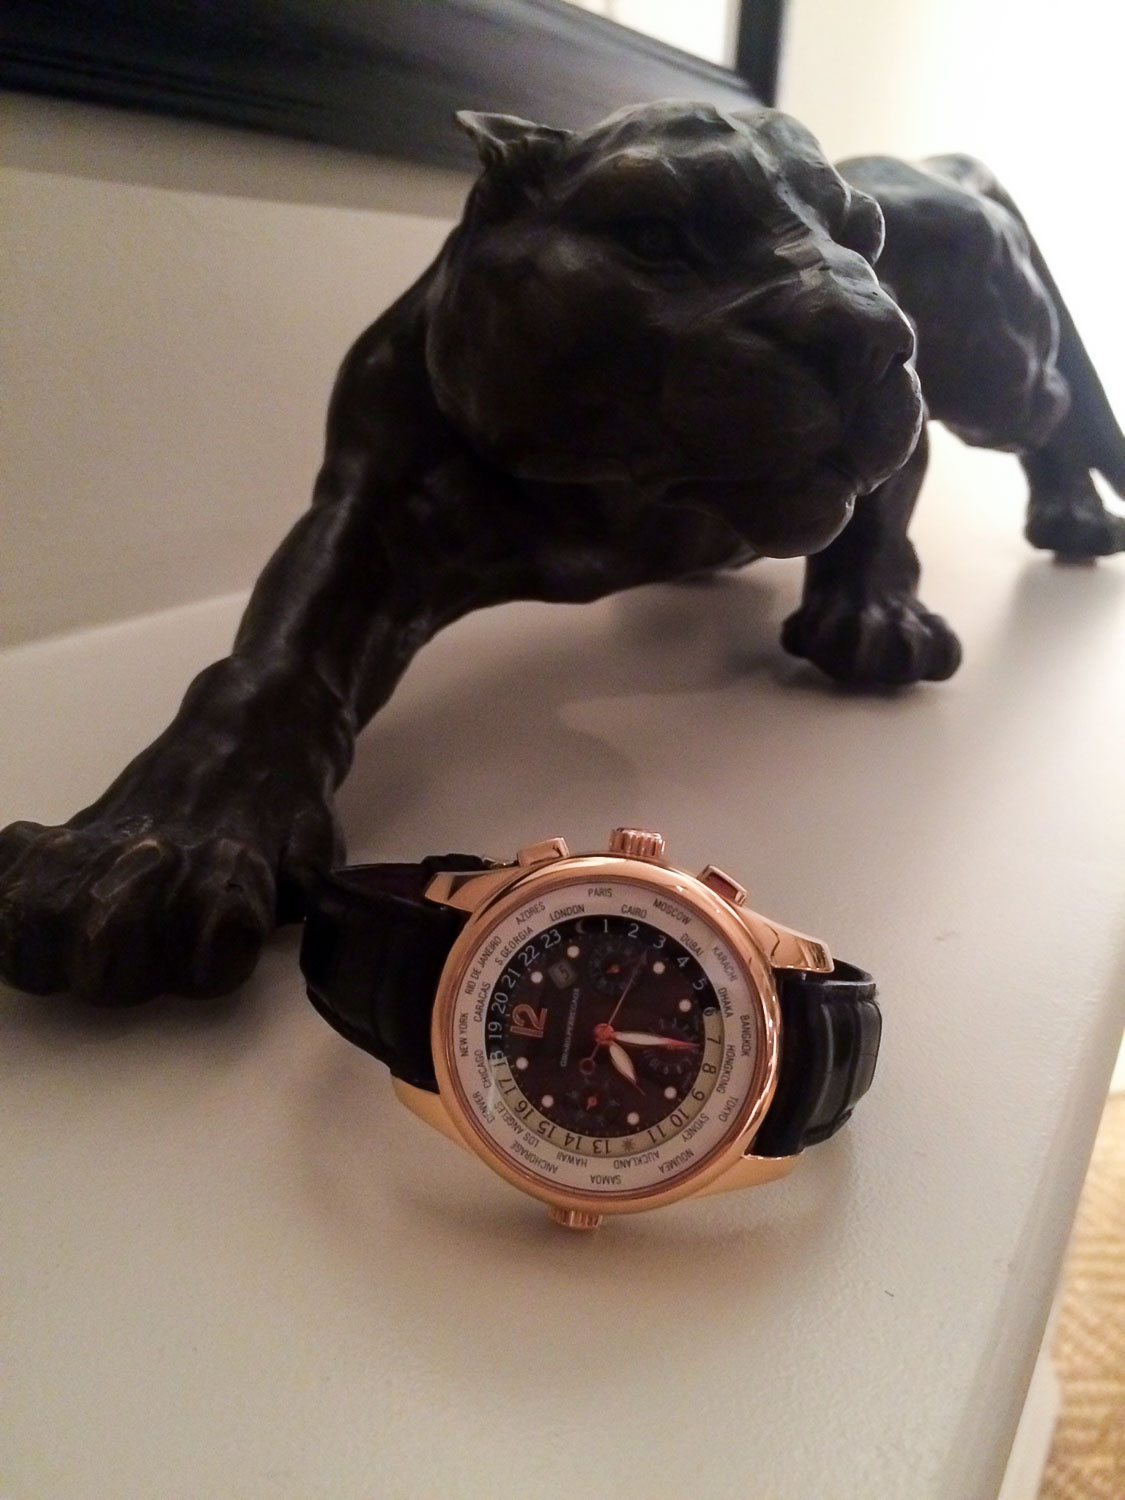 Girard Perregaux WWTC Chronograph World Timer - Collectors Series - 7